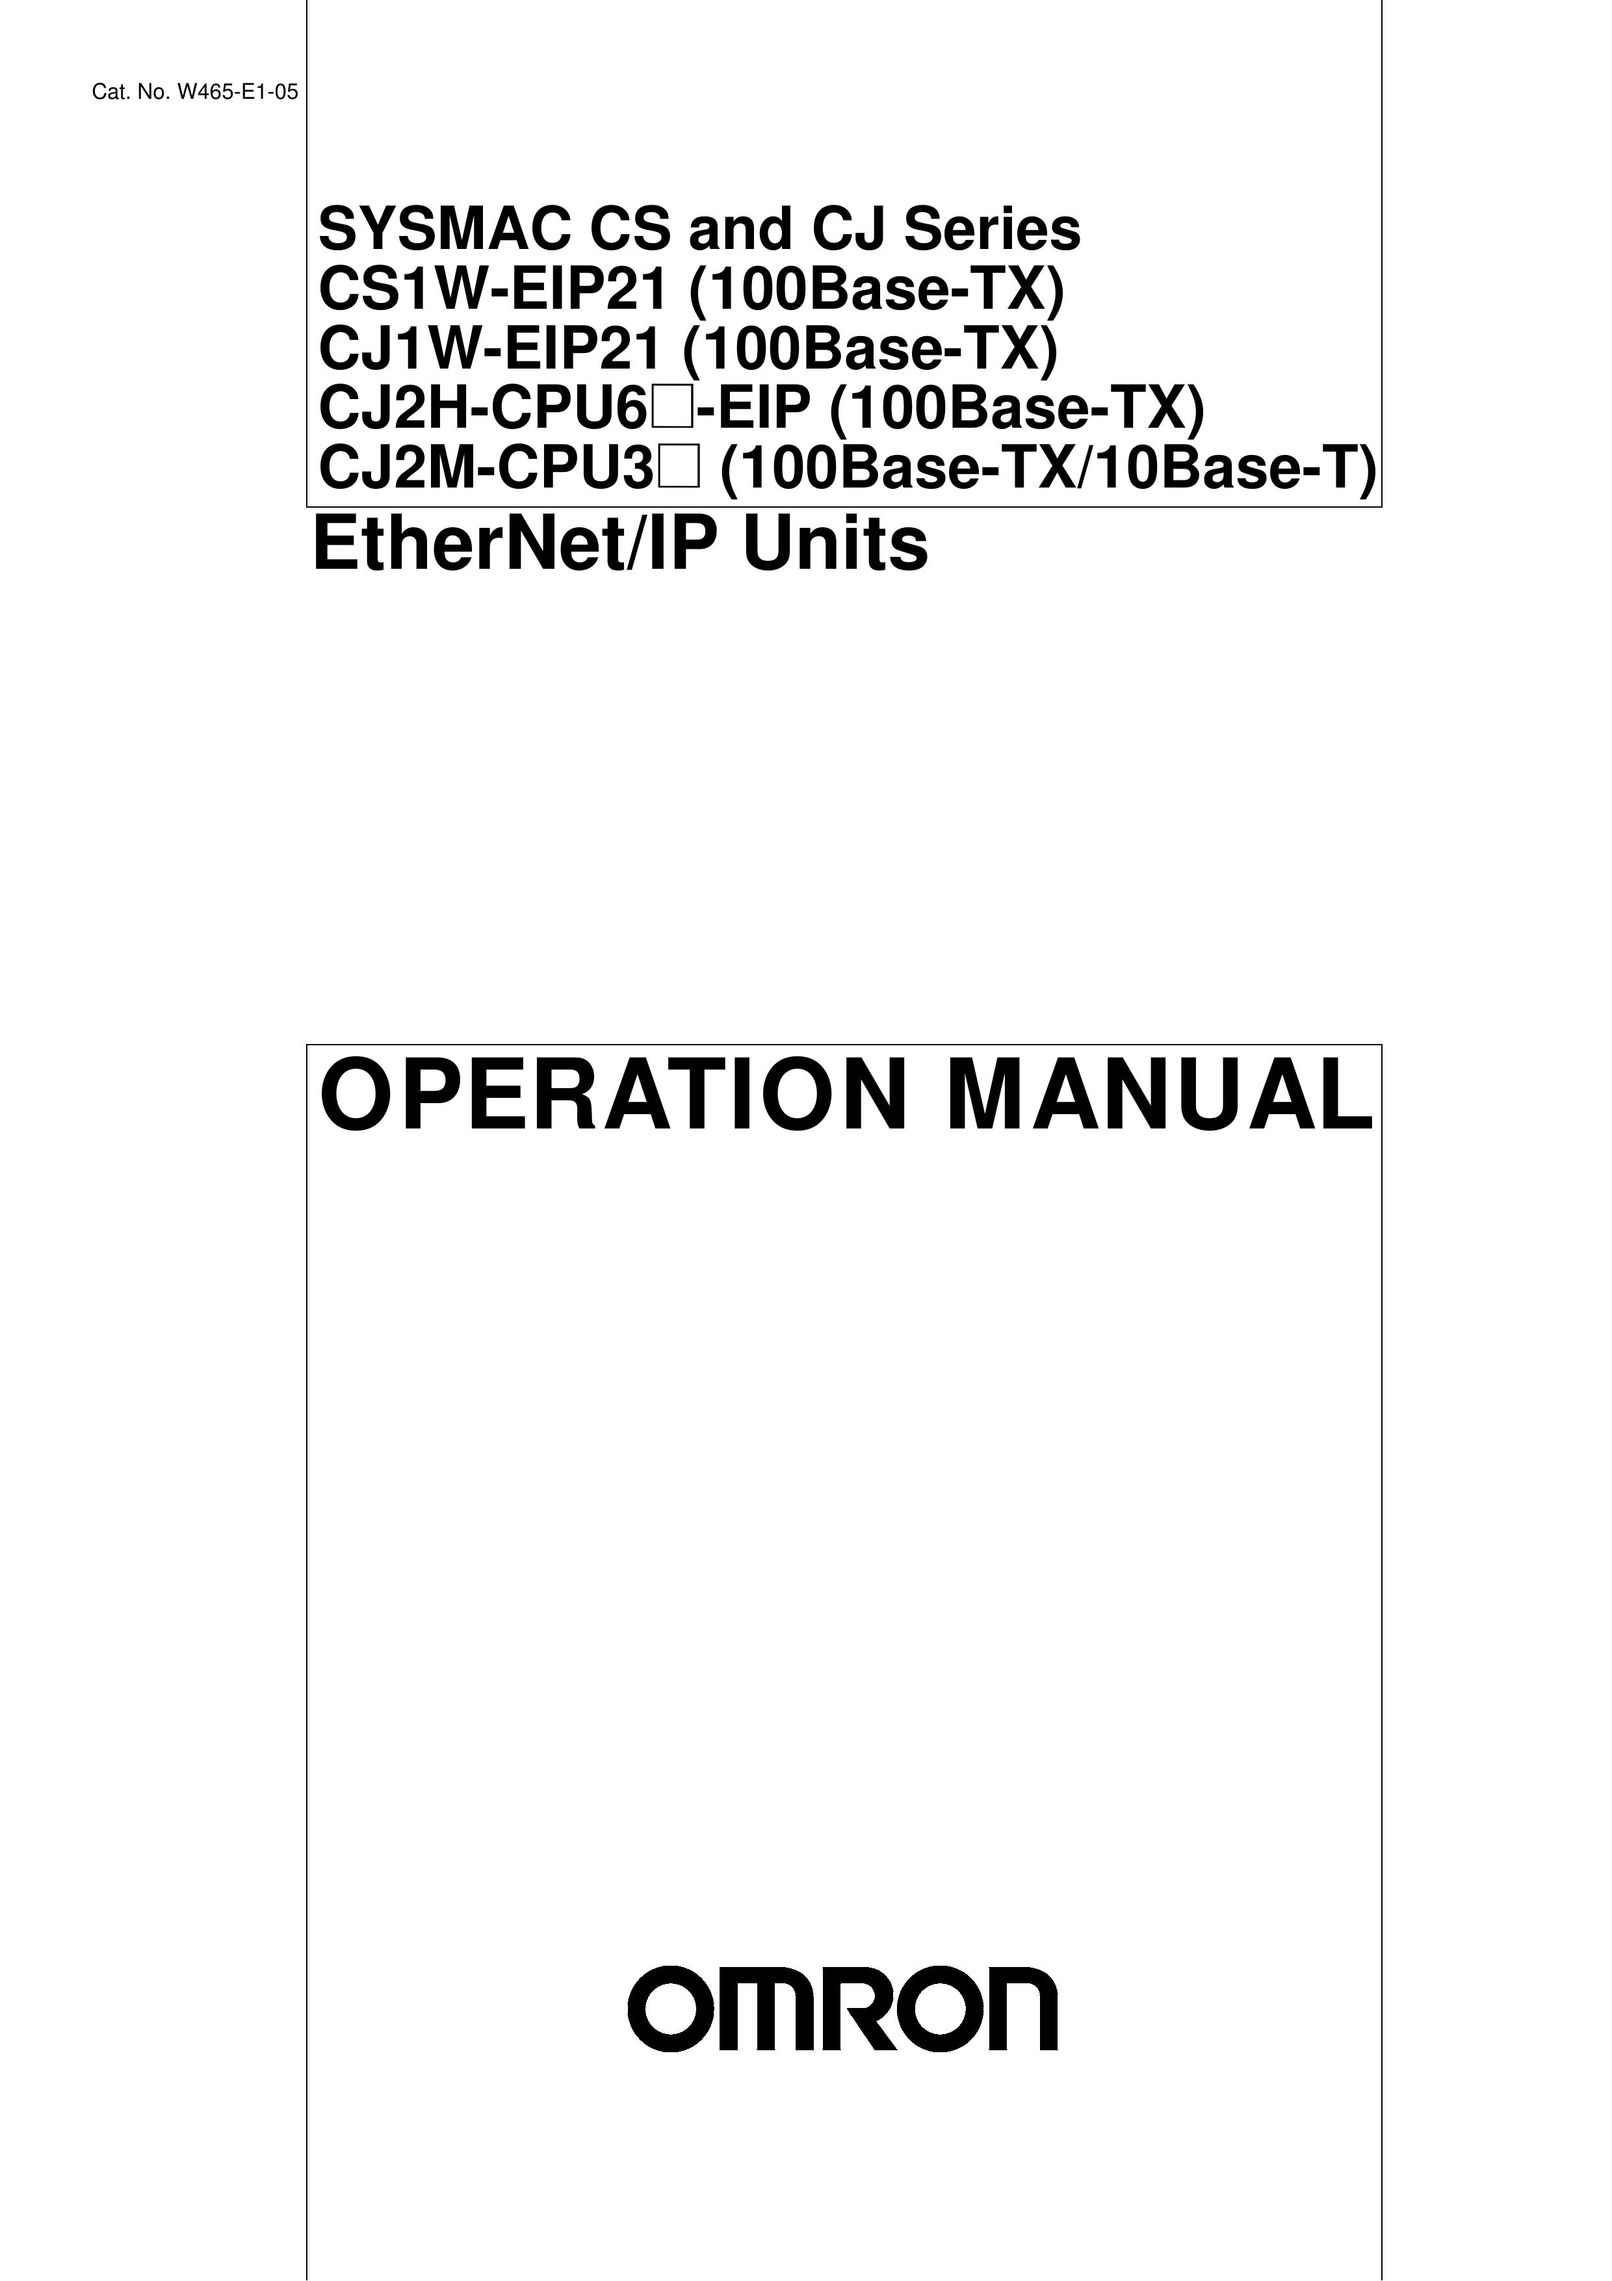 Omron CS1W-EIP21 Network Card User Manual